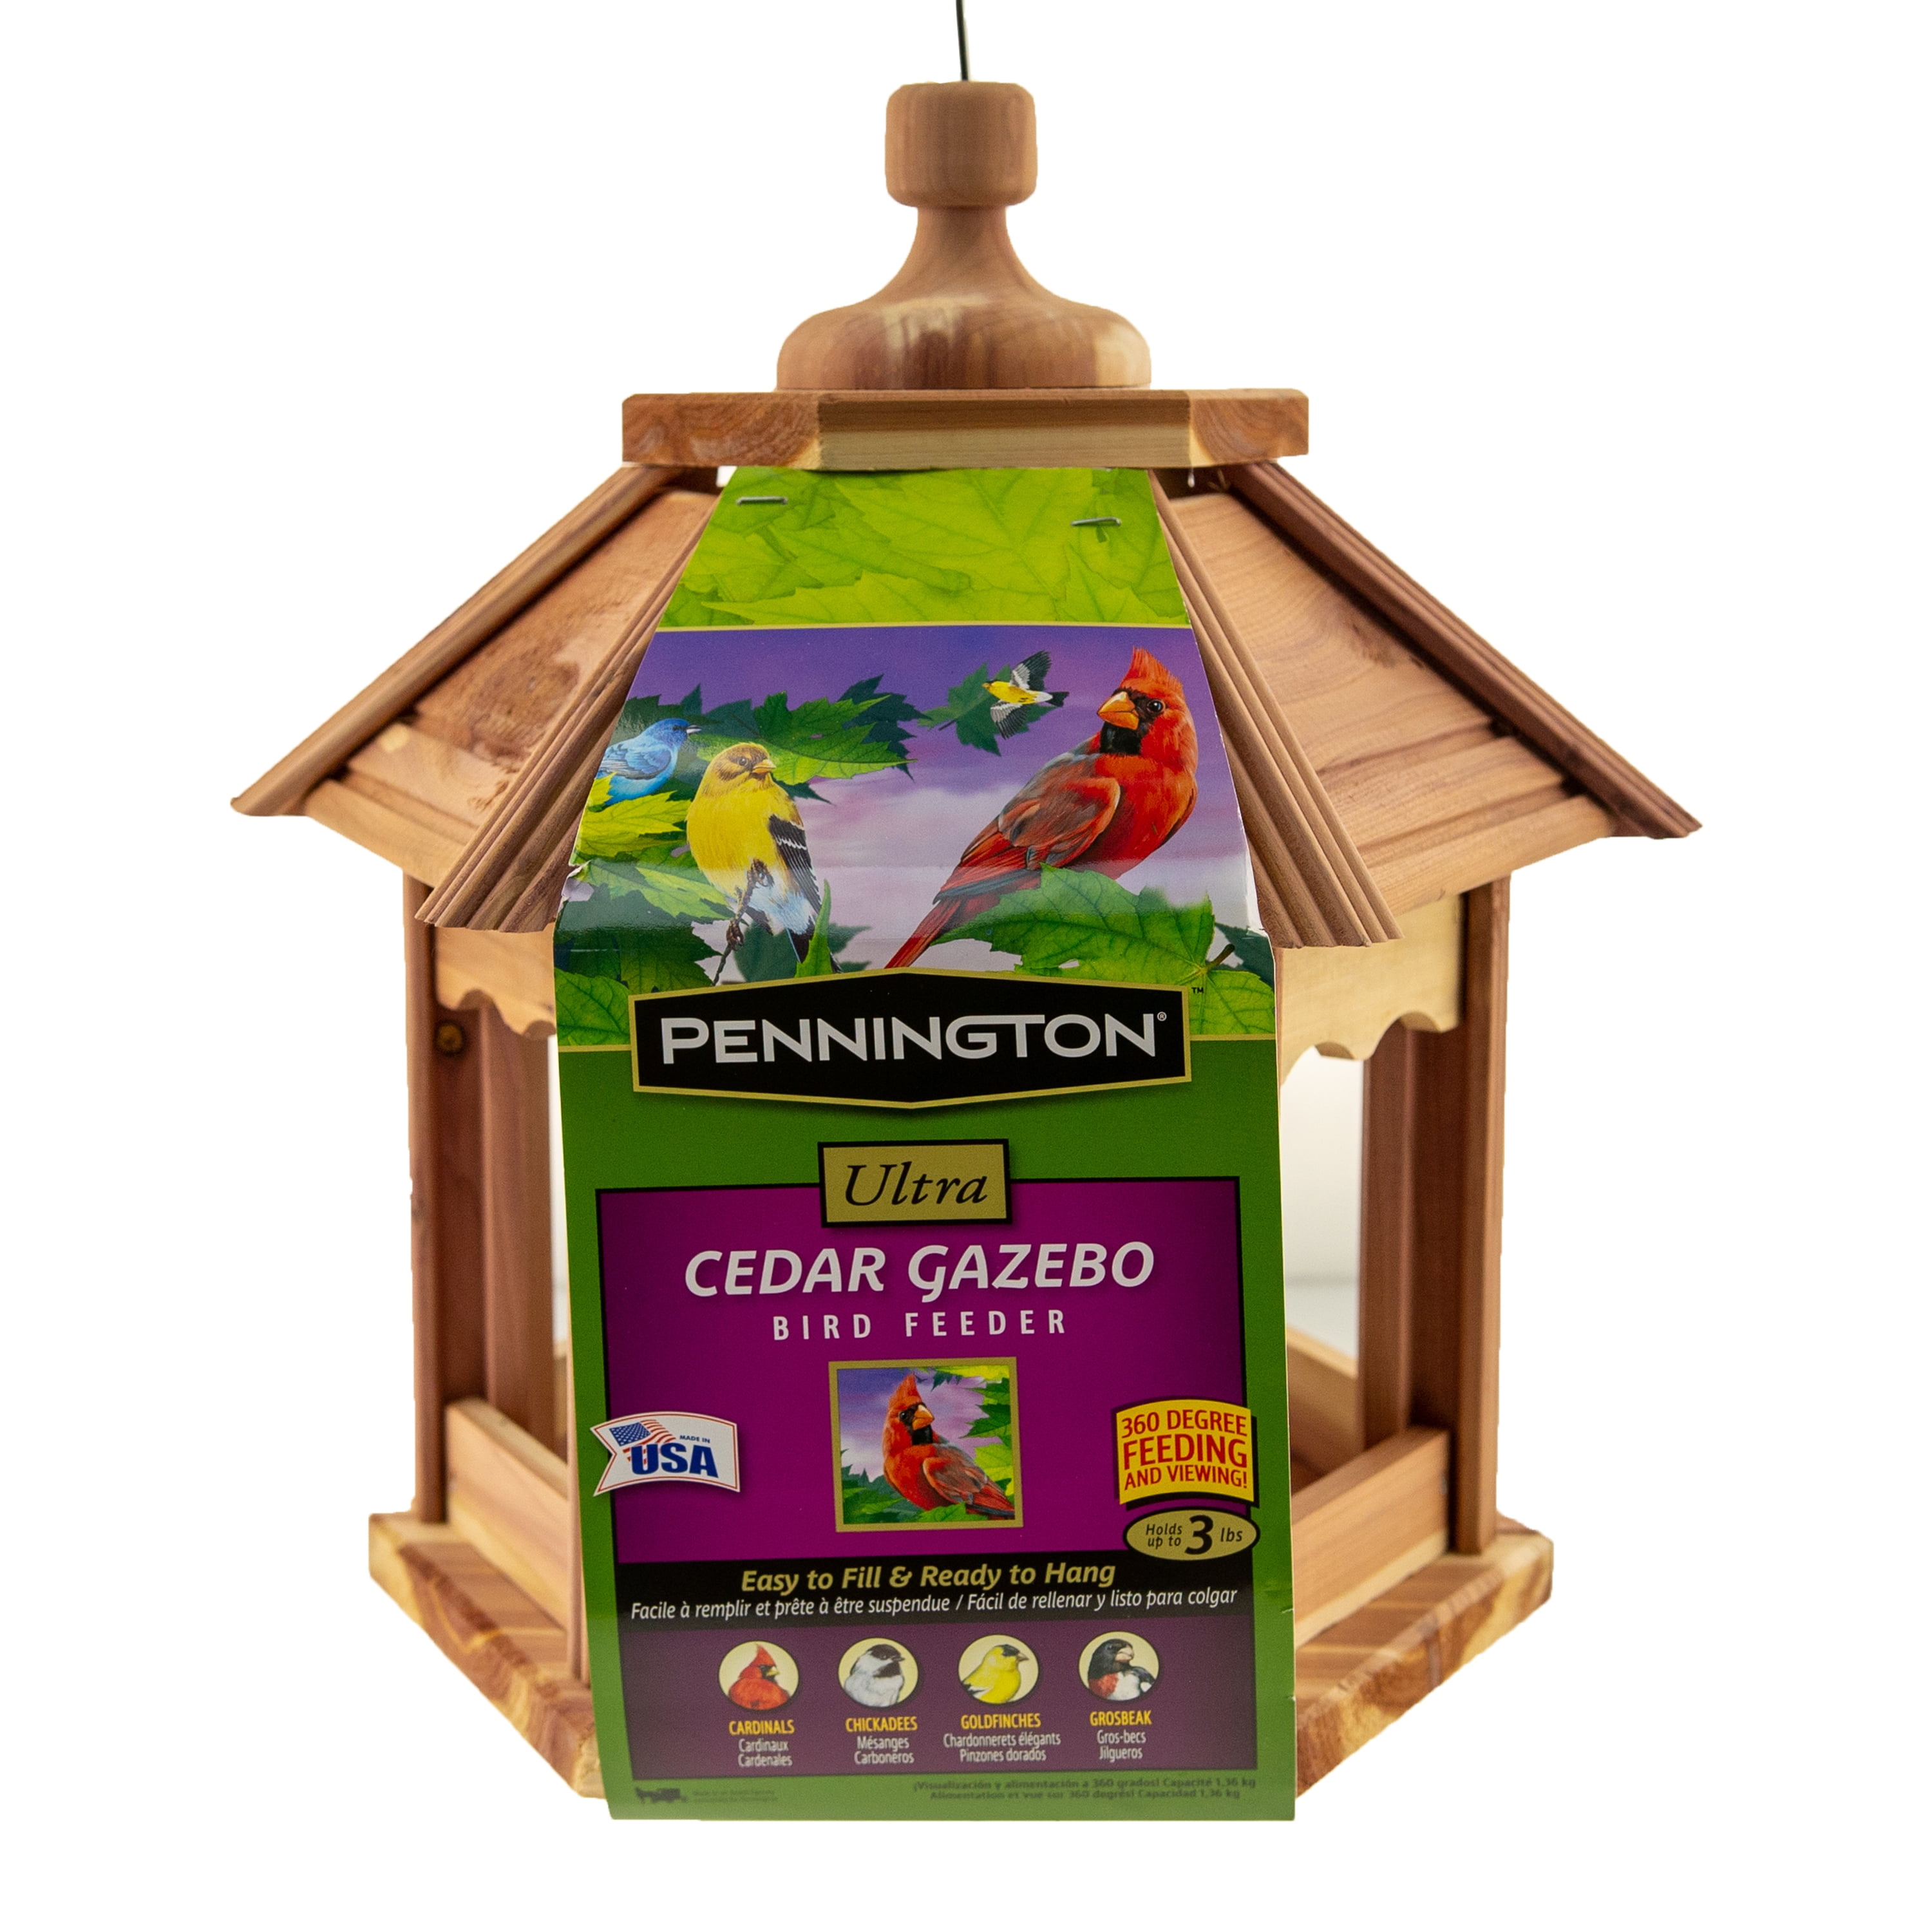 Pennington Classic Cedar Nature's Friend Wild Bird Feeder 3 lbs Seed Capacity 